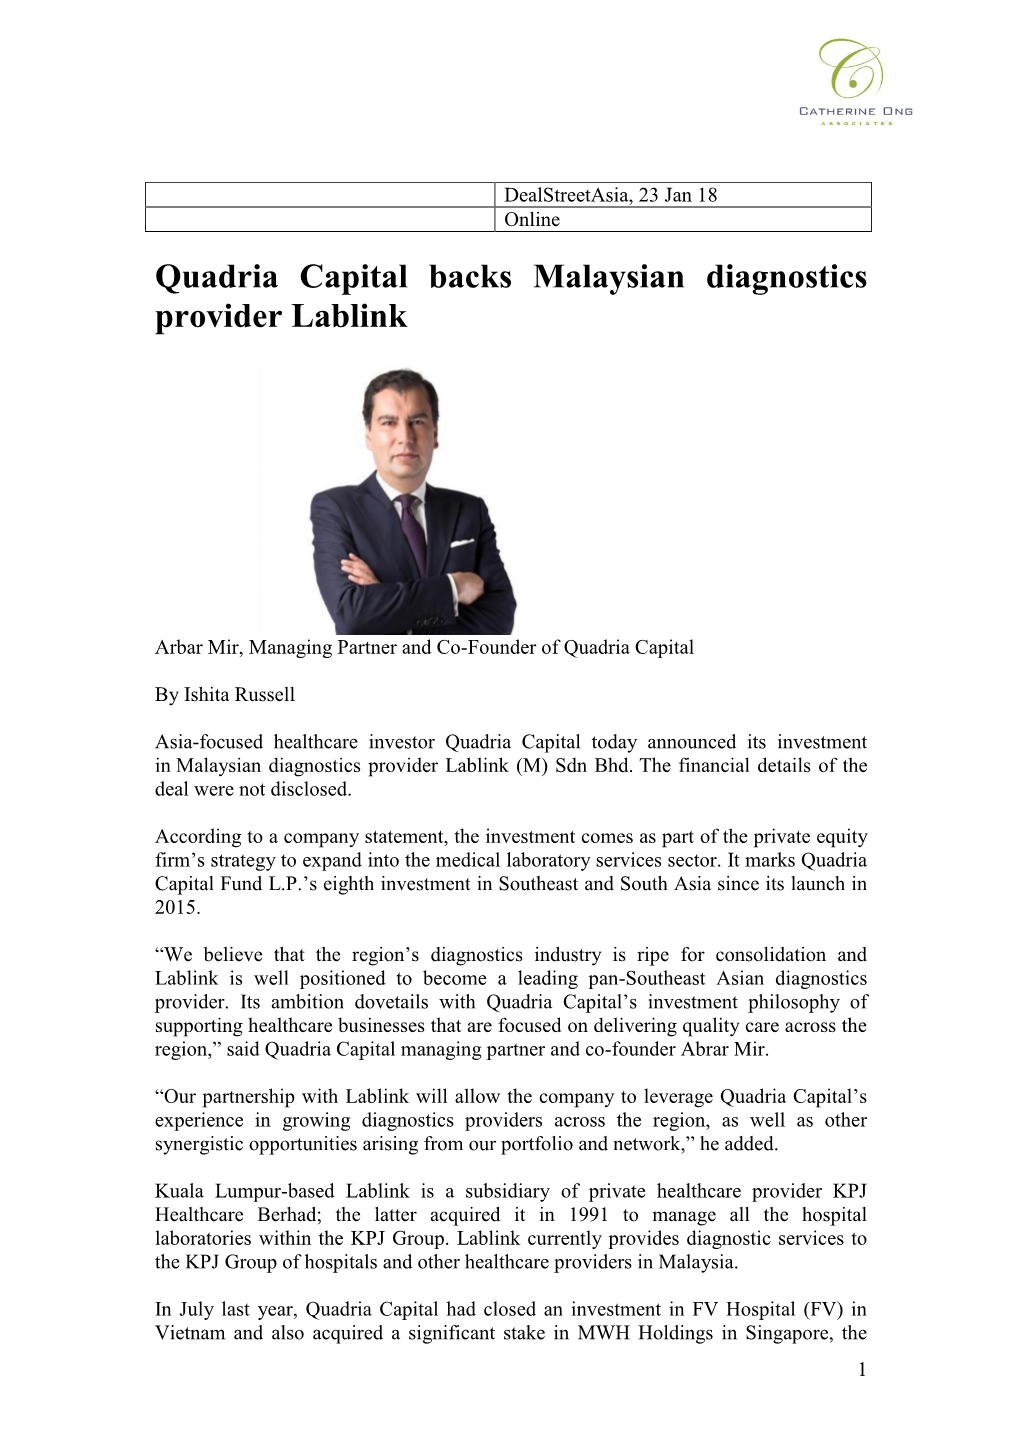 Quadria Capital Backs Malaysian Diagnostics Provider Lablink